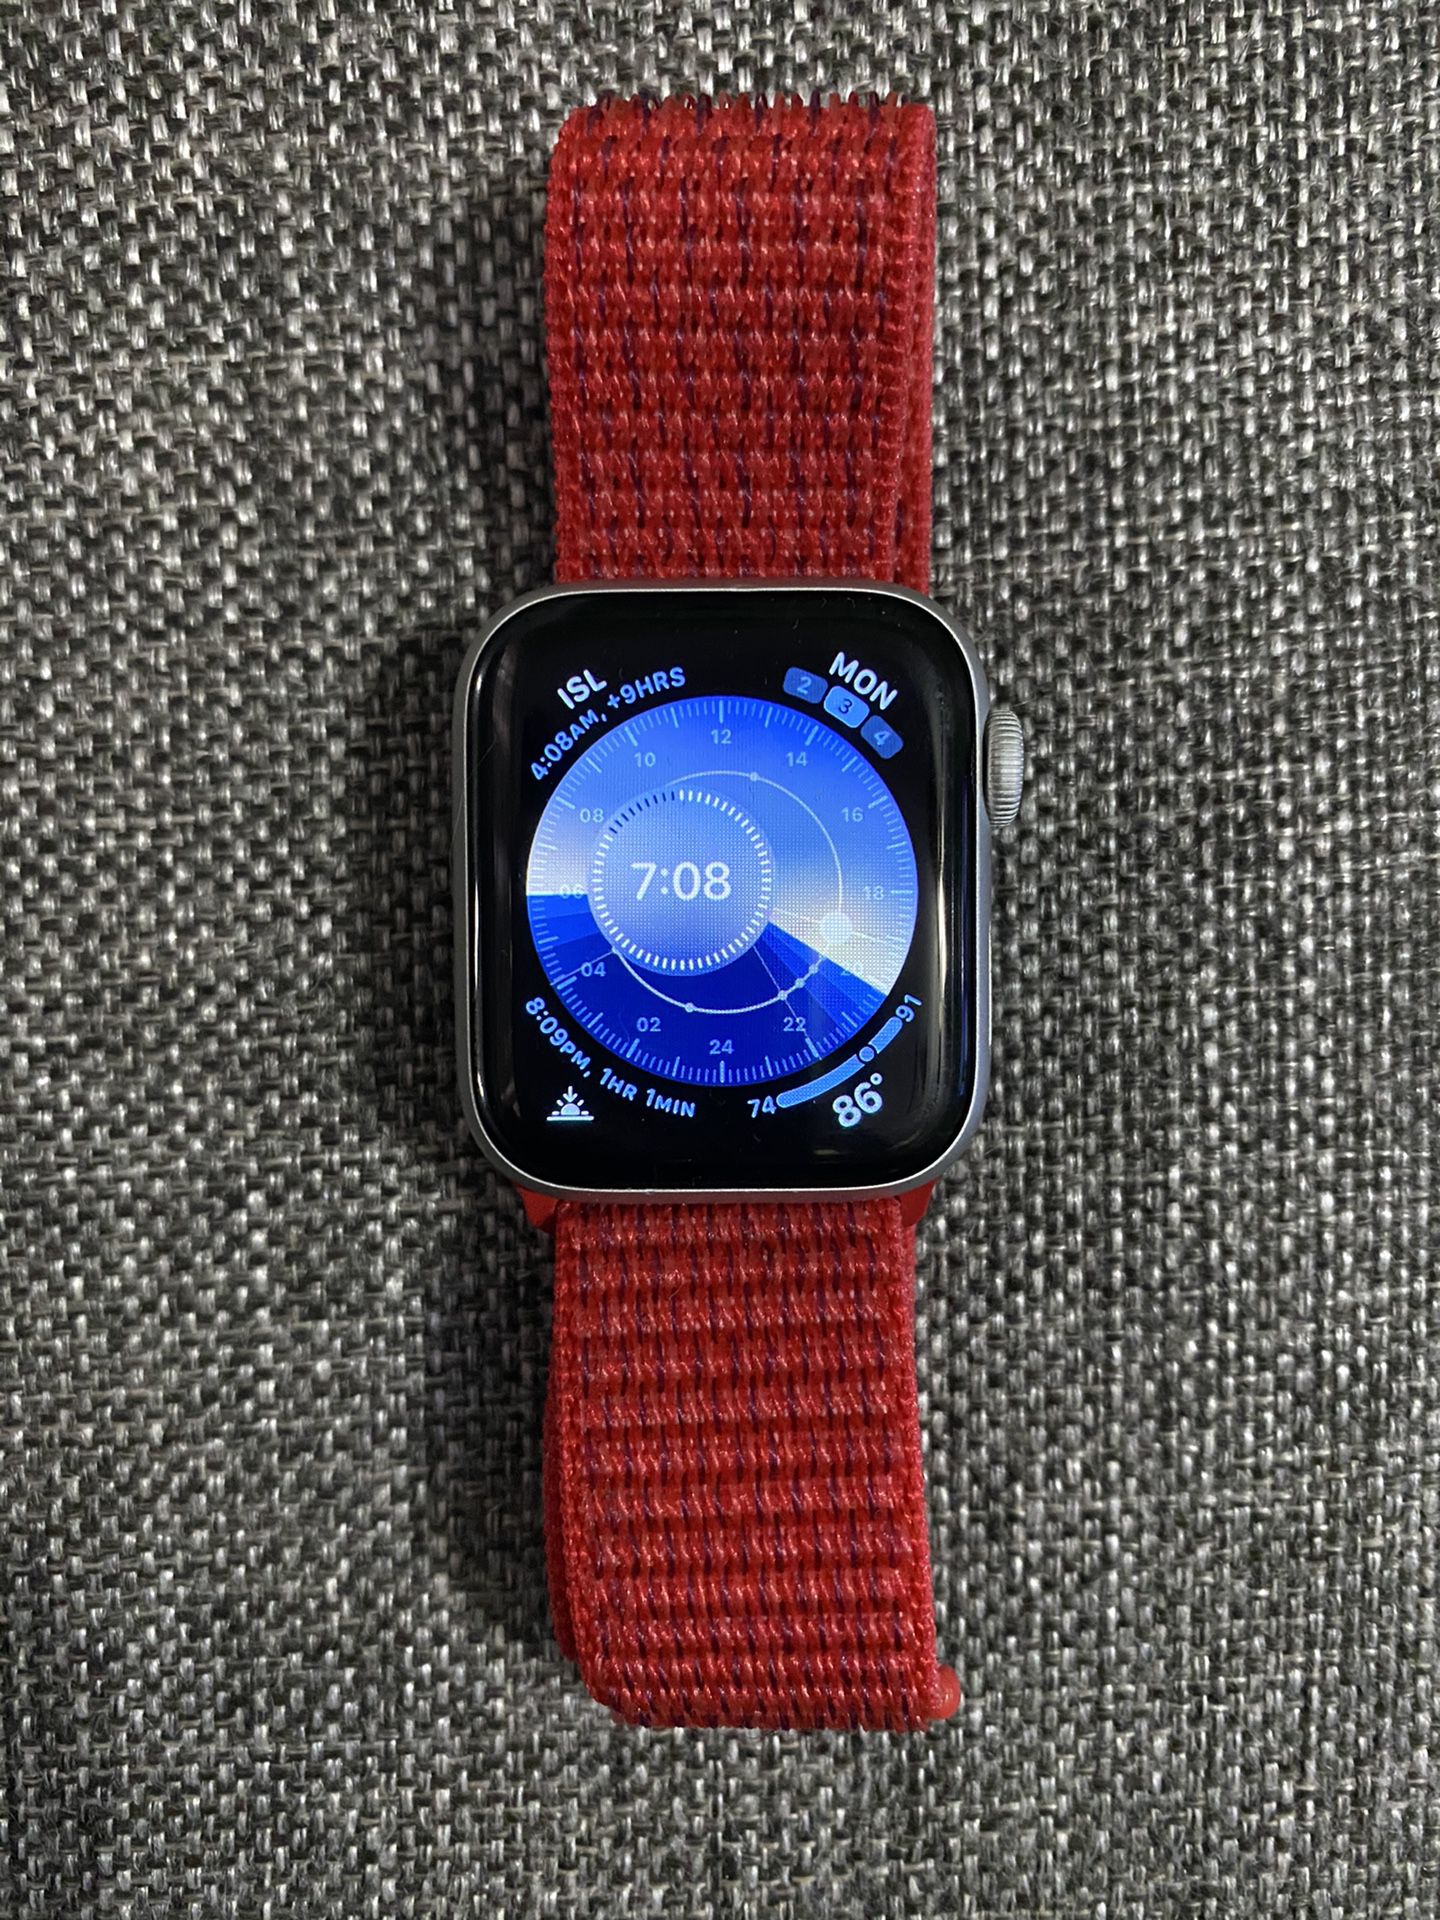 Apple Watch Series 4 40mm WiFi version